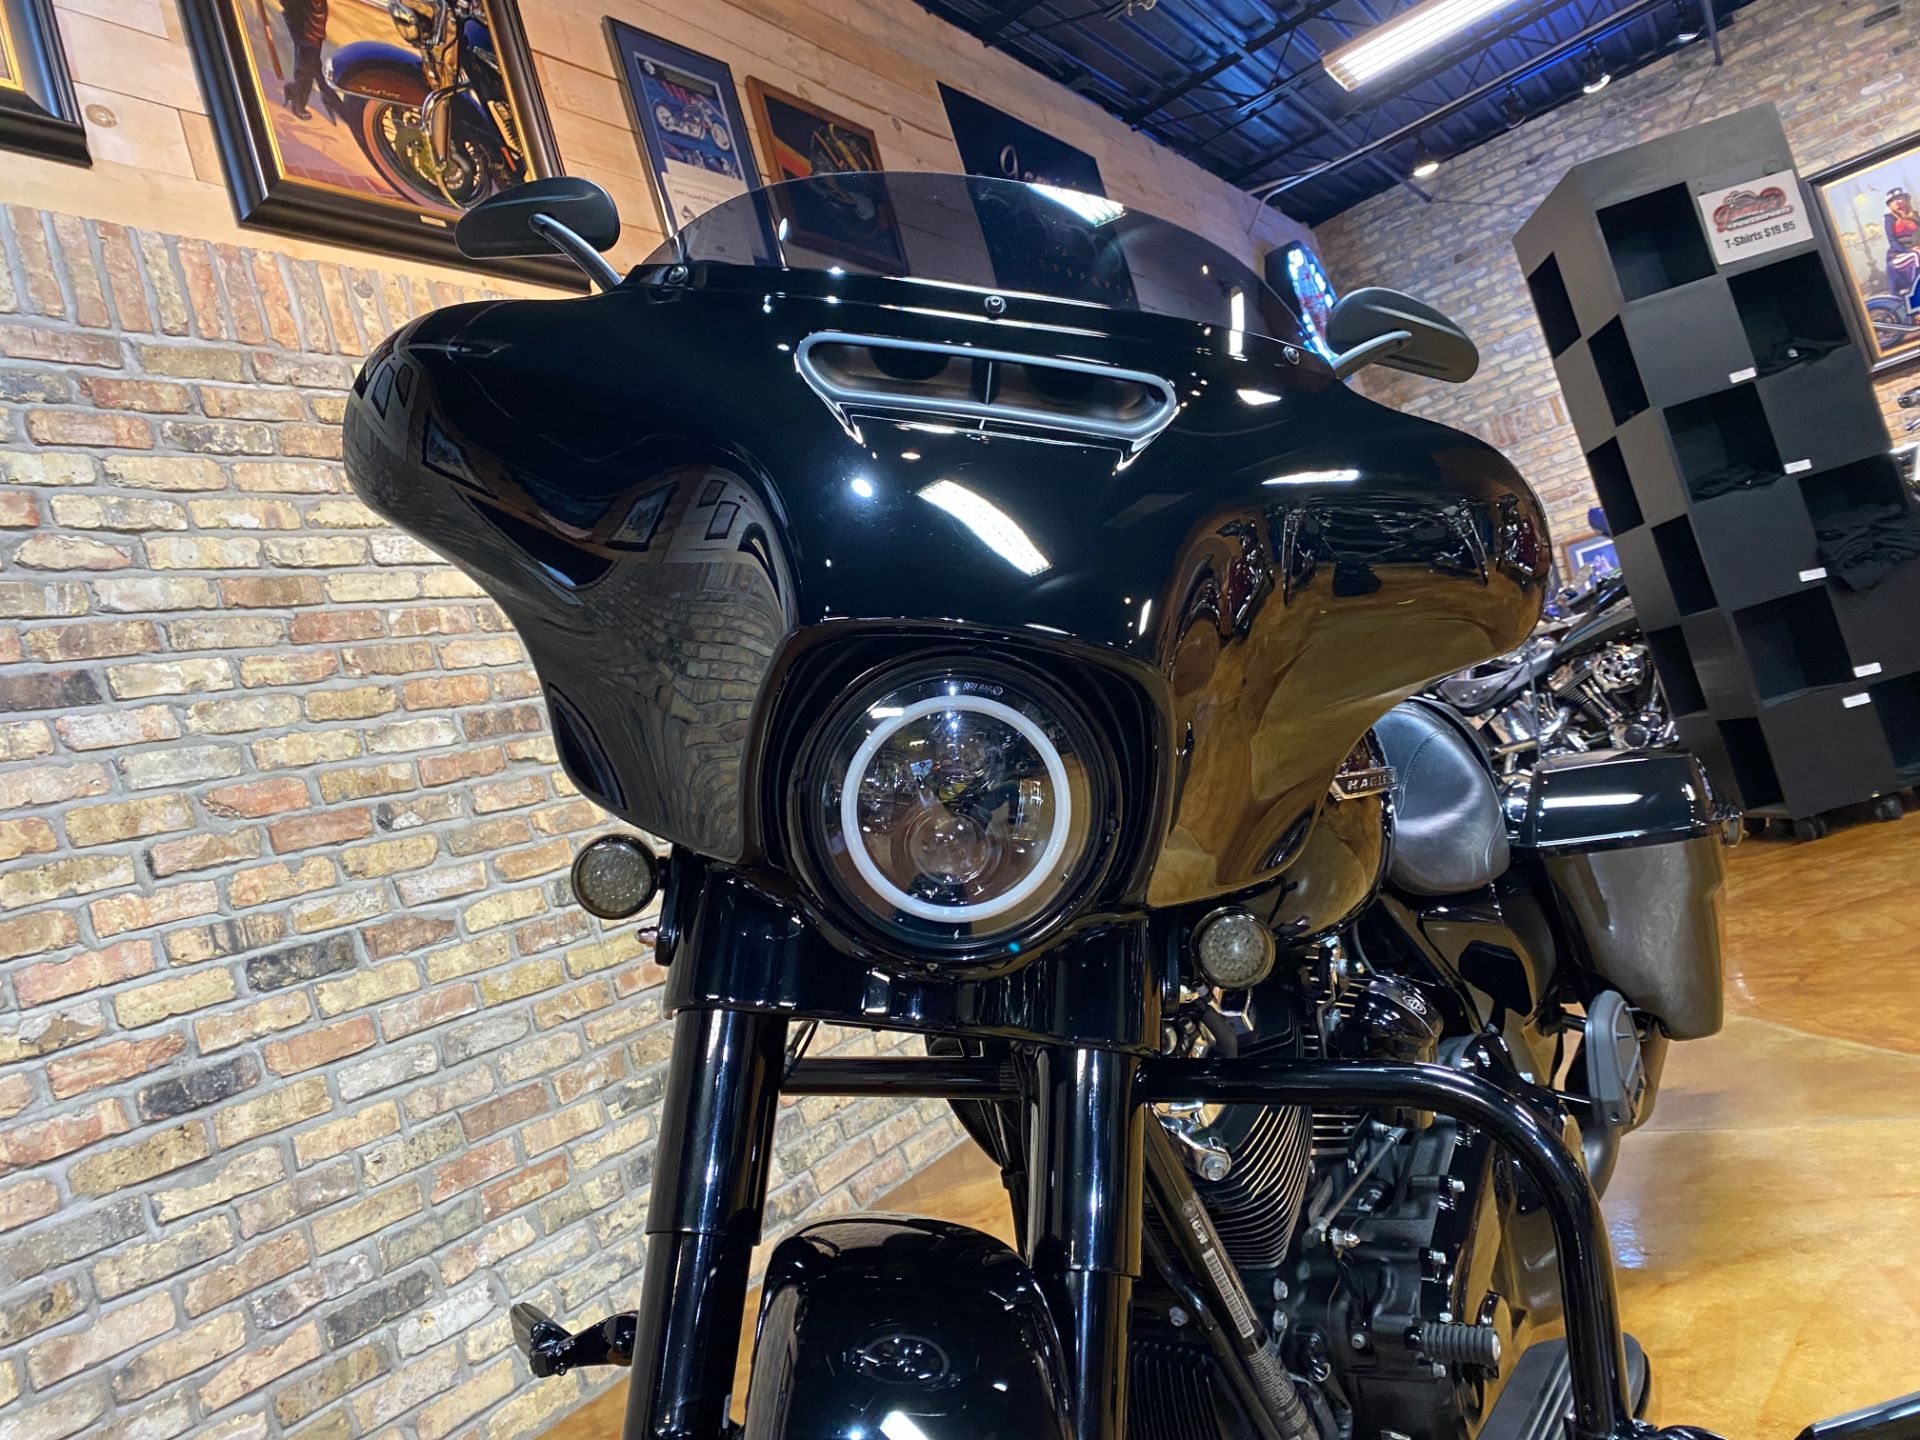 2019 Harley-Davidson Street Glide® Special in Big Bend, Wisconsin - Photo 23